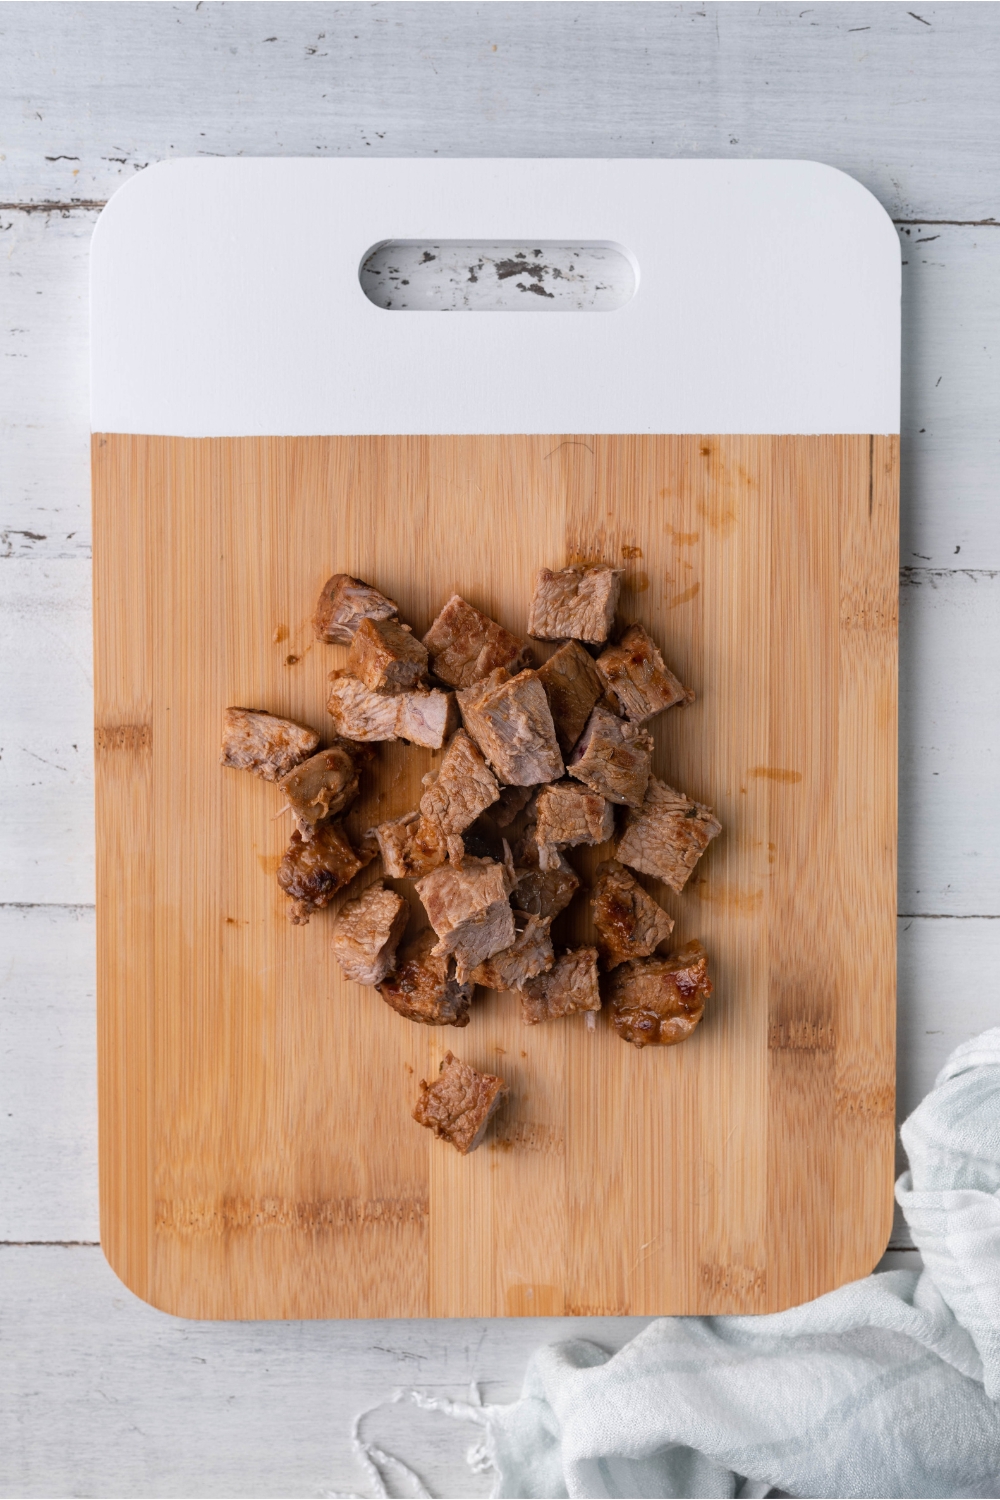 Cubed steak on a cutting board.